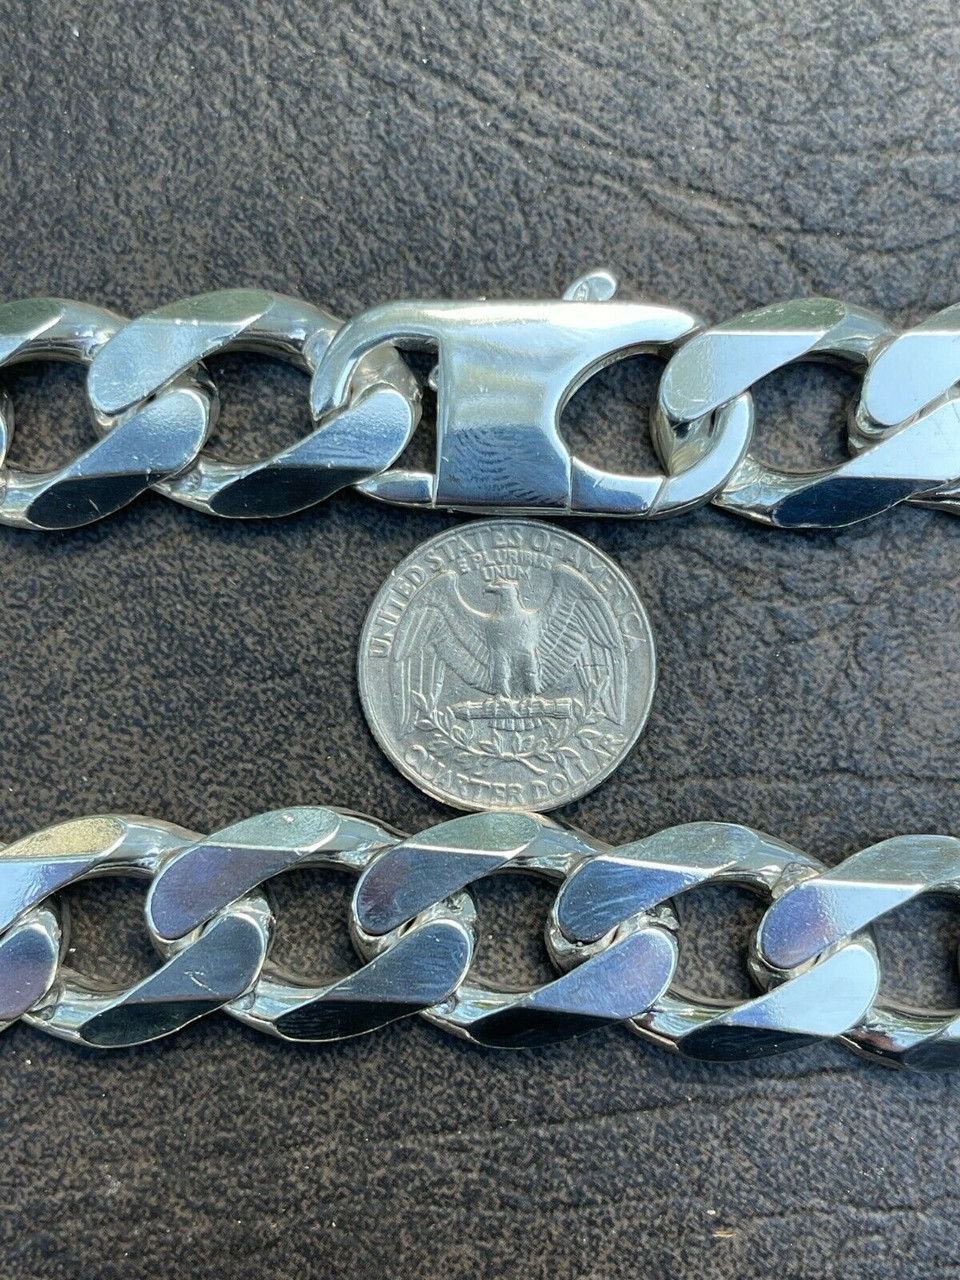 18mm Sterling Silver 925 HEAVY Curb Cuban Chain & Bracelet Silver thic –  Daniel J